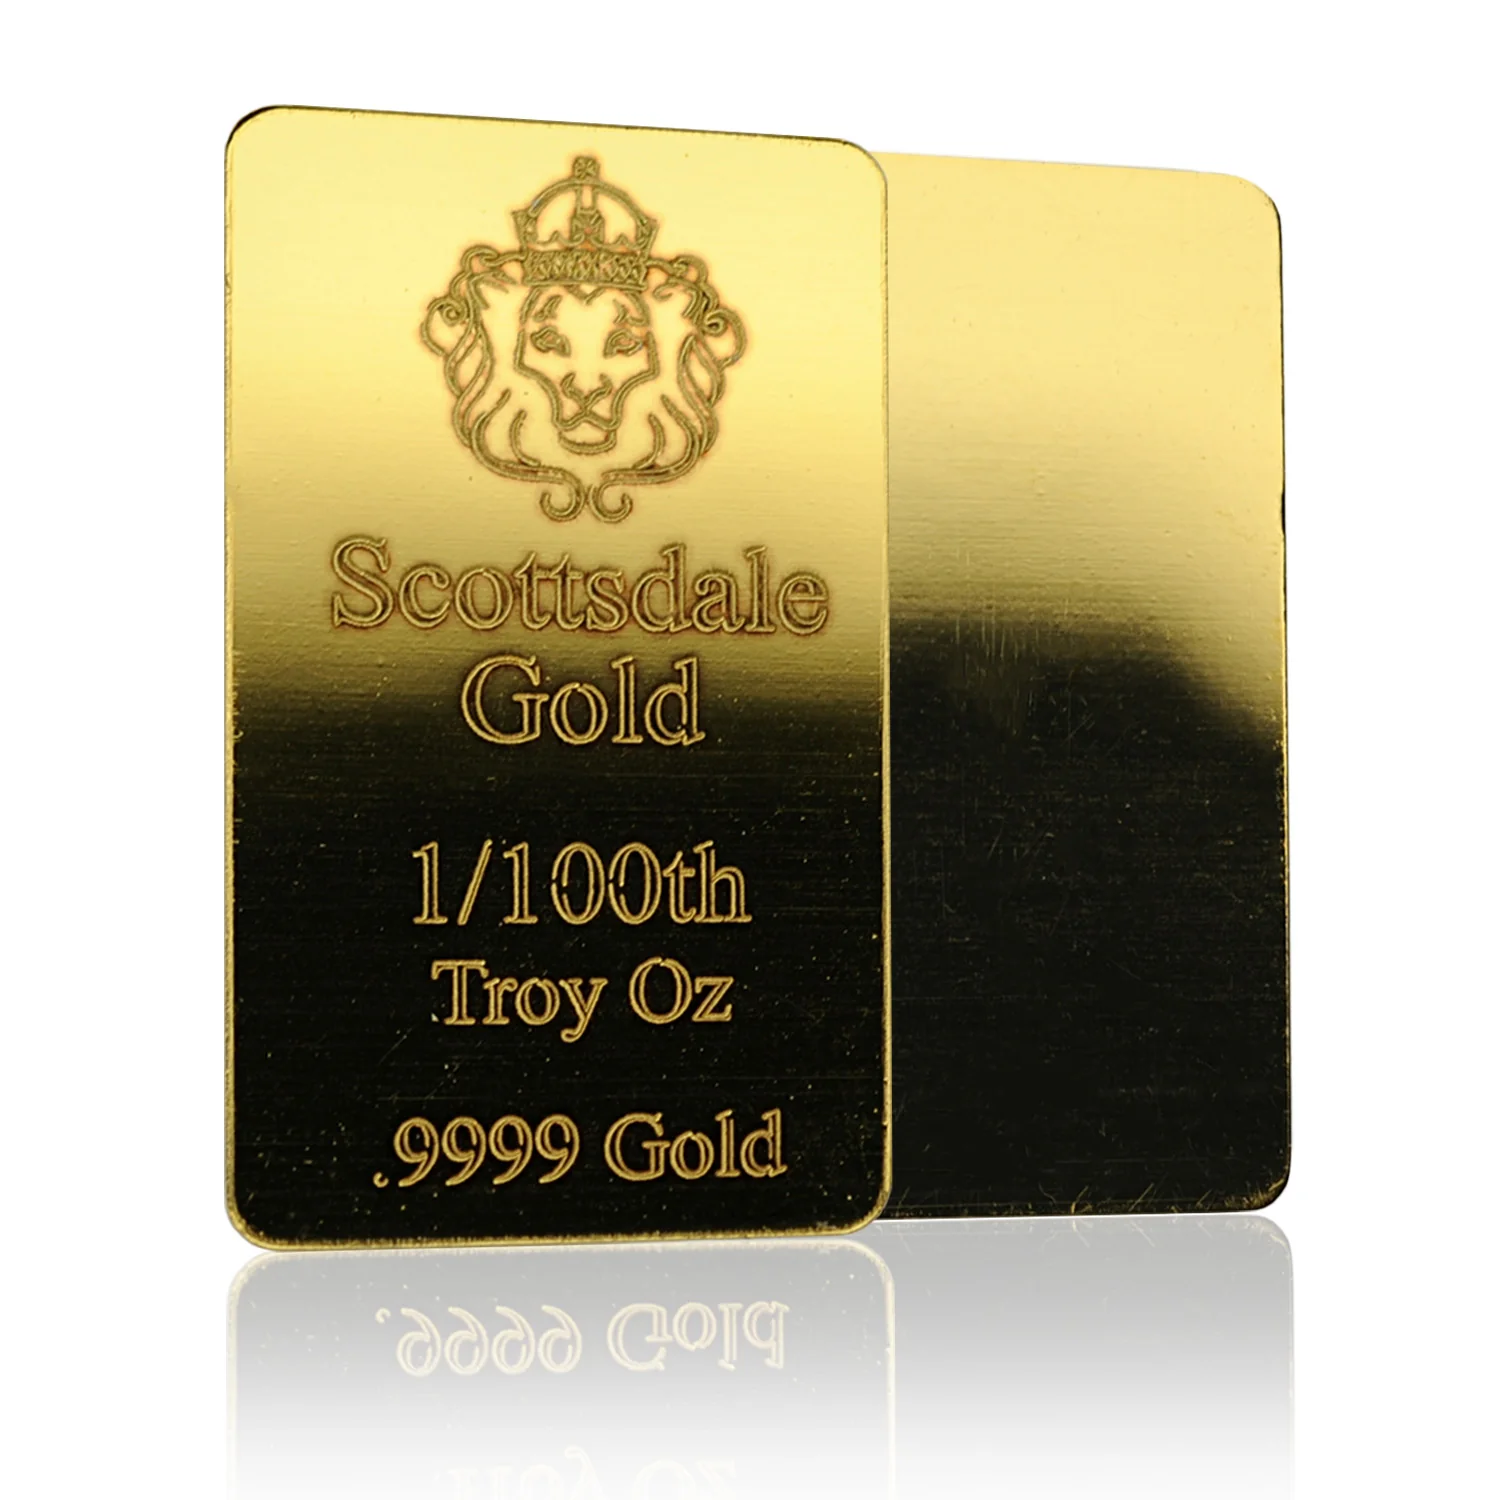 1/100 oz Scottsdale Gold Bar For Sale (New)